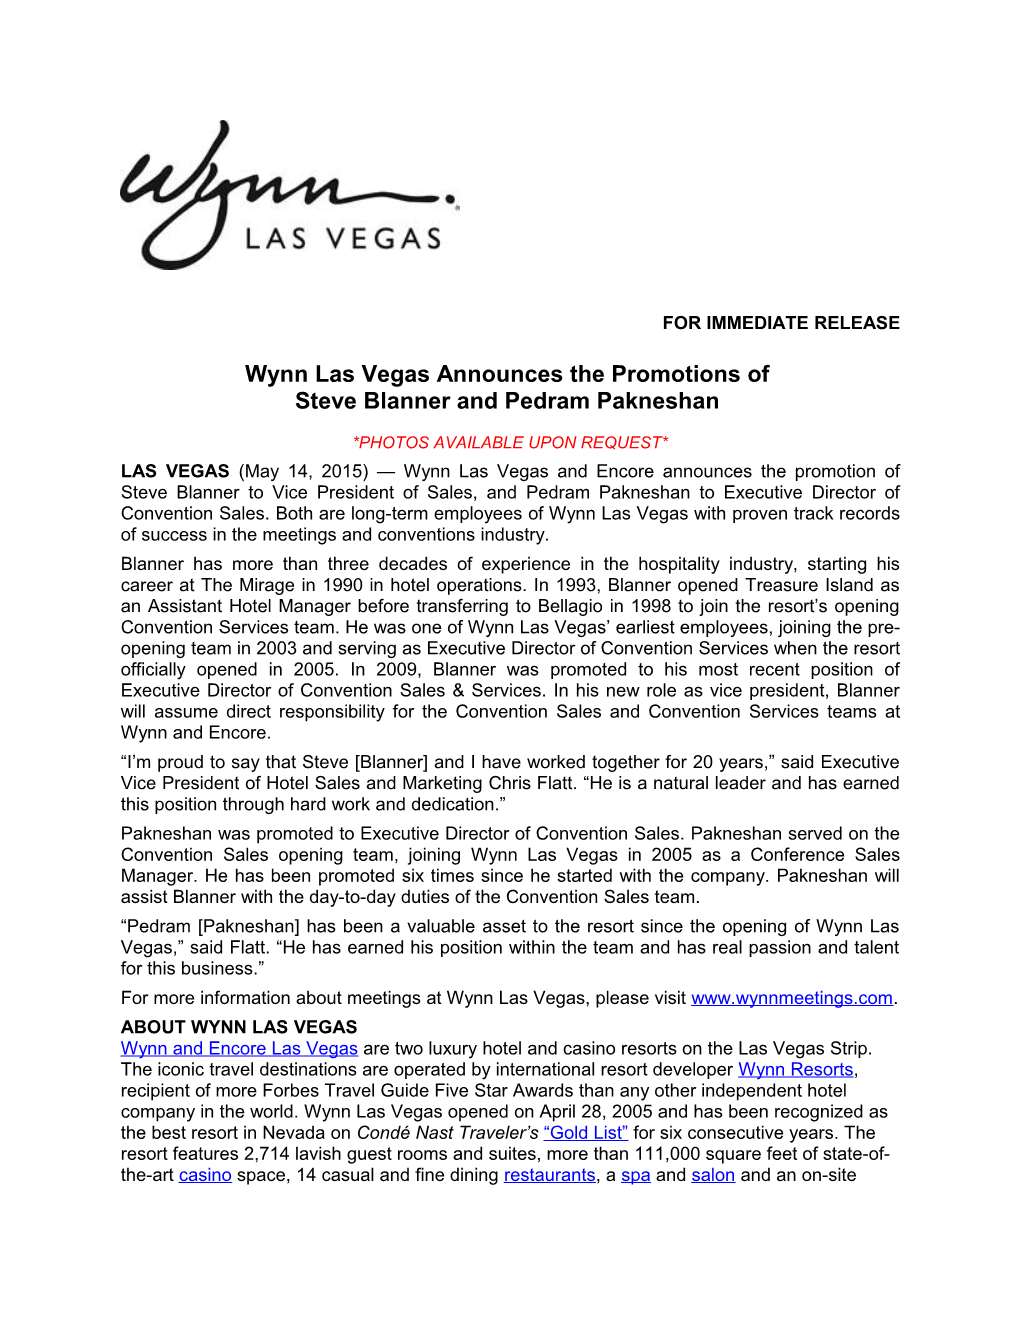 Wynn Las Vegas Announces the Promotions Of